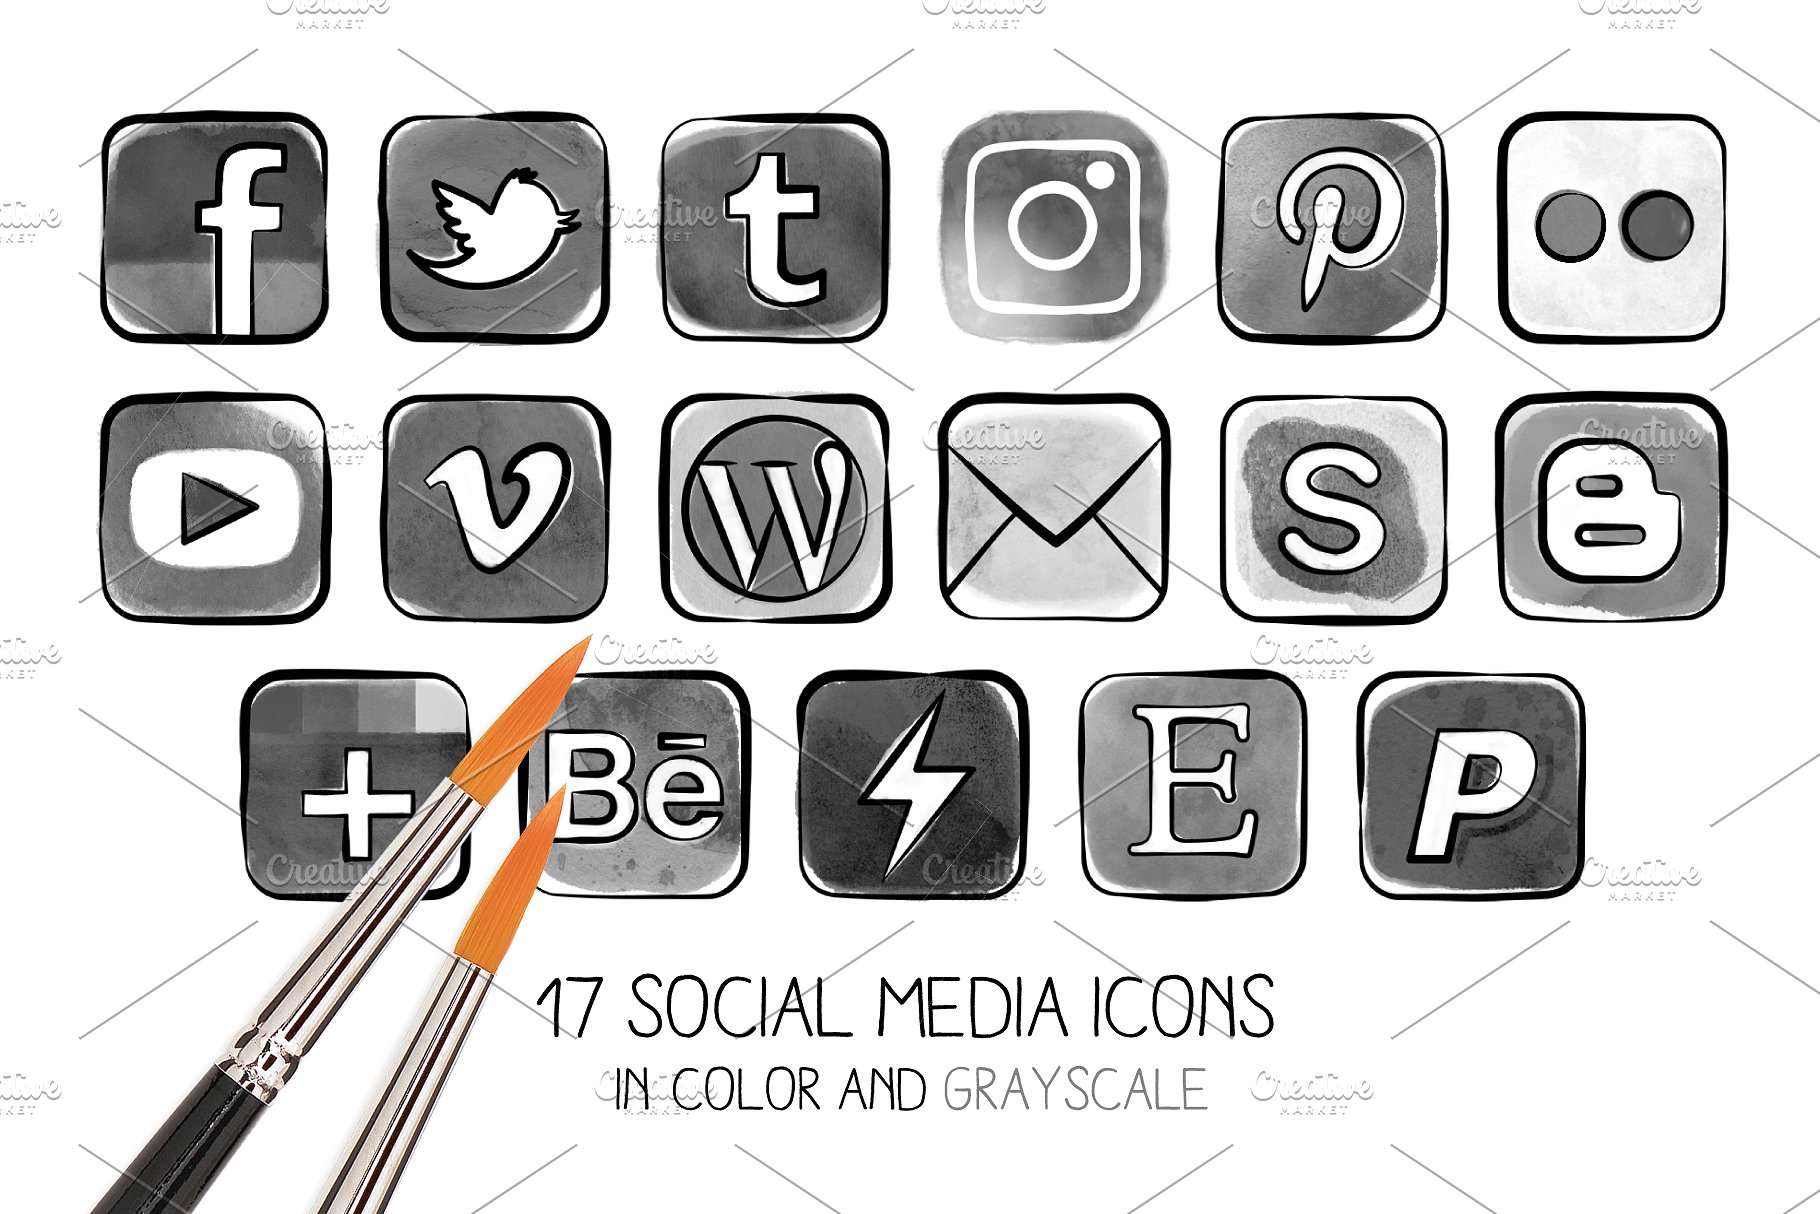 17种水彩效果社交媒体图标  Watercolor effect social media icons插图(1)